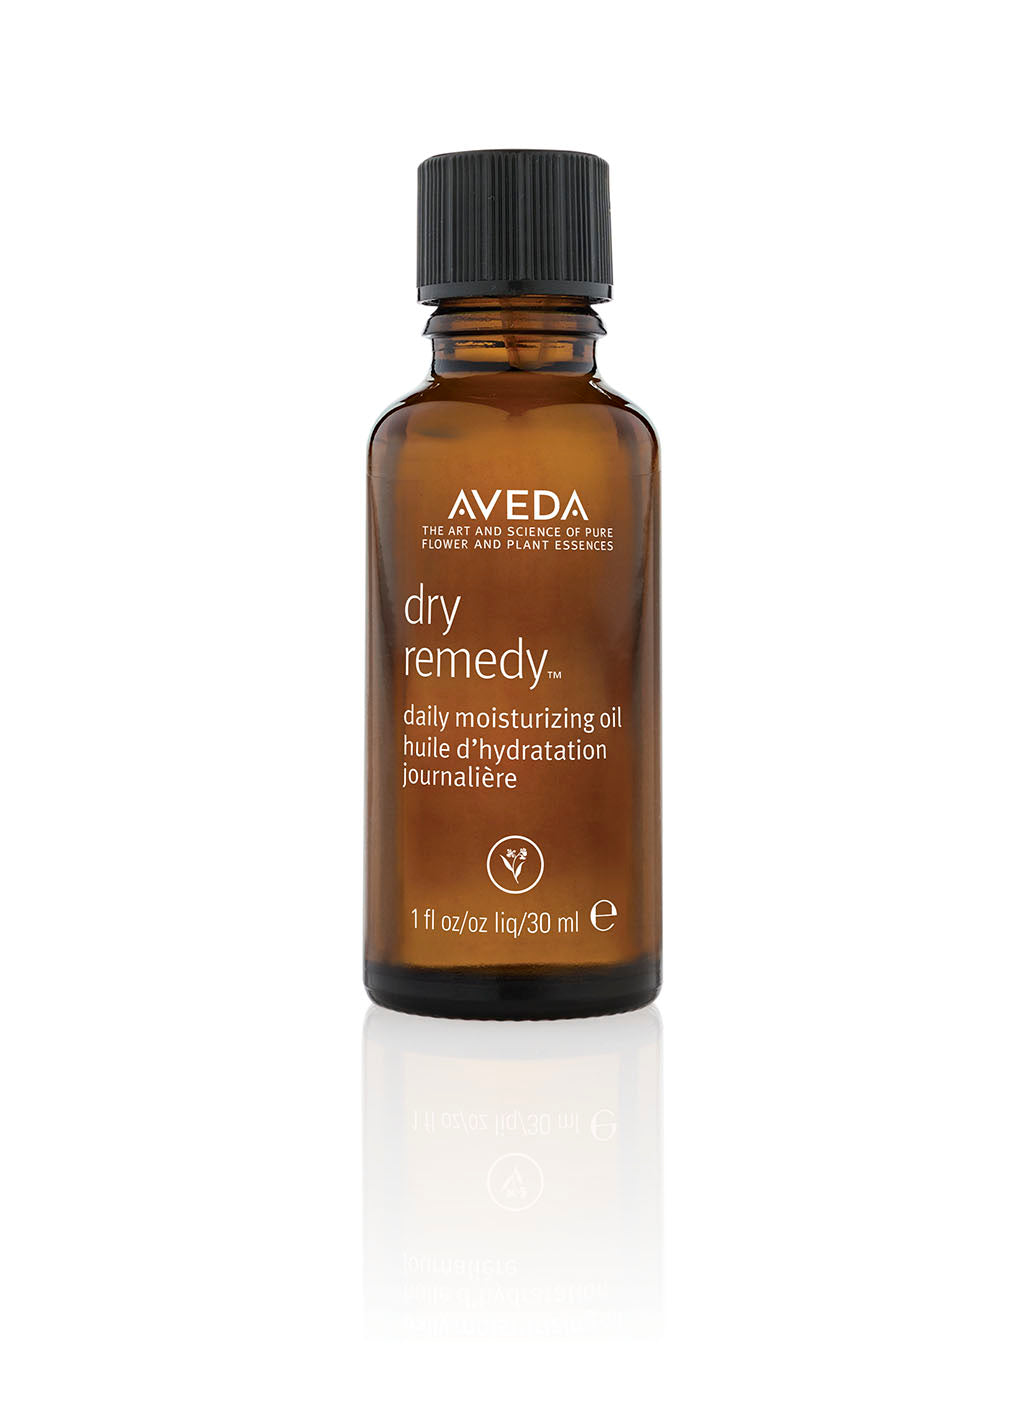 Aveda dry remedy™ daily moisturizing oil